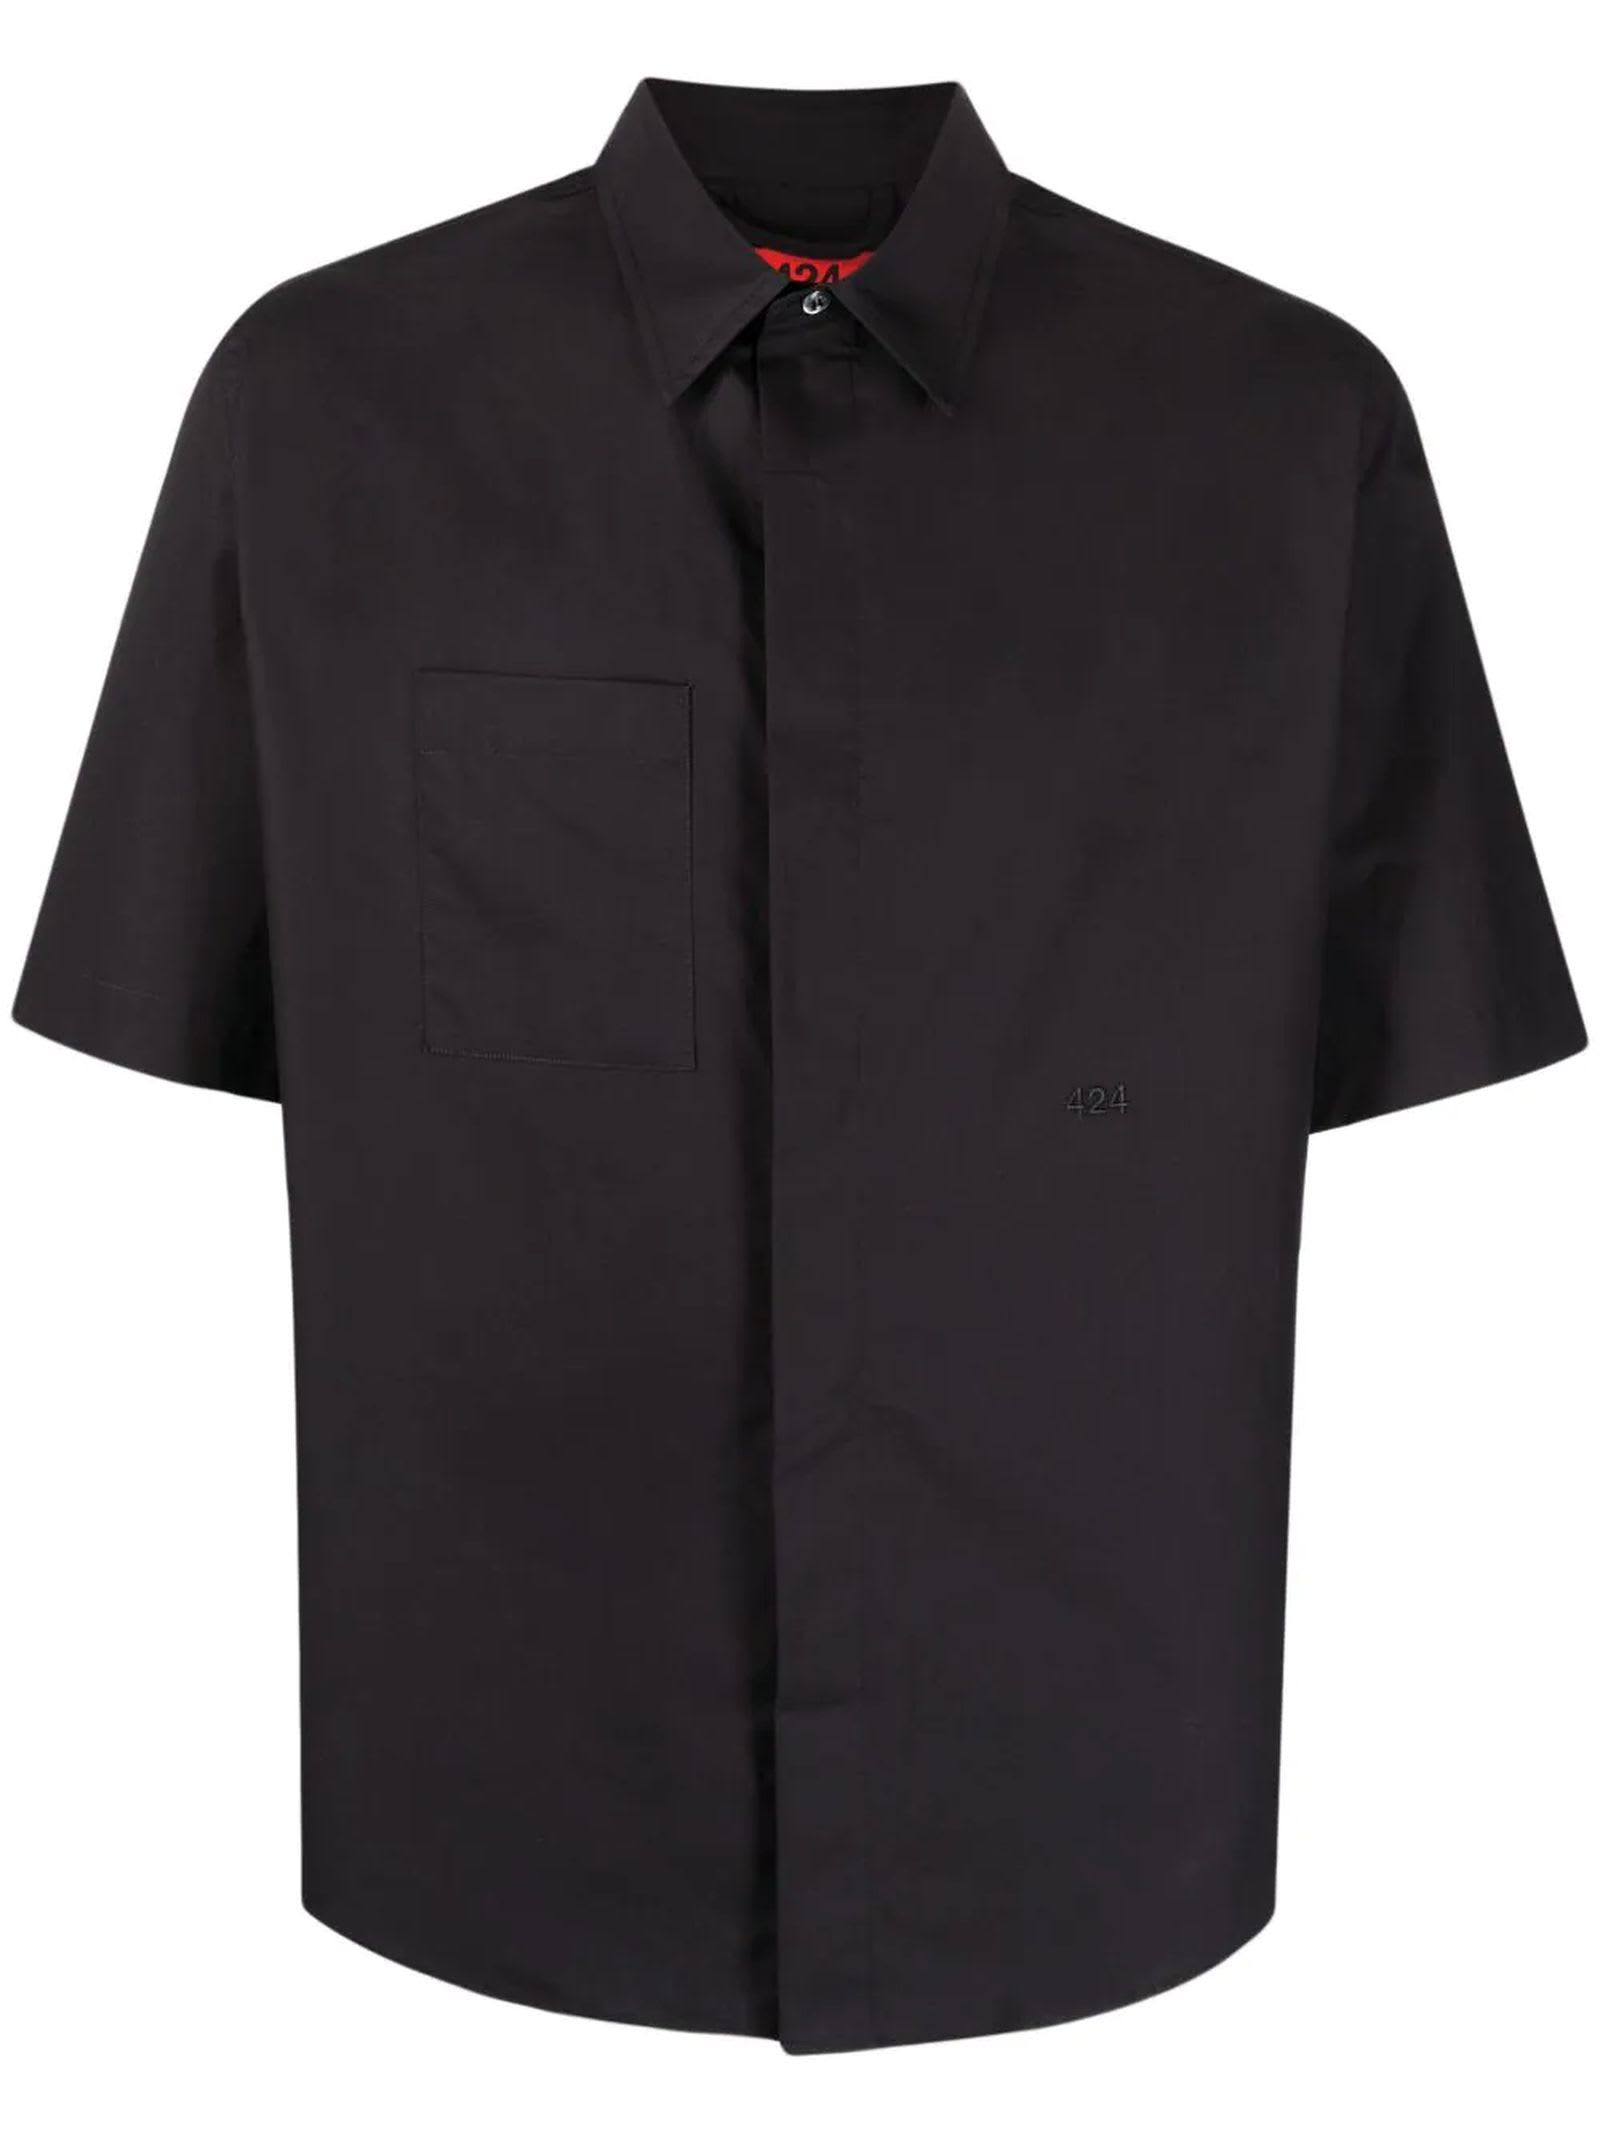 FourTwoFour on Fairfax Black Cotton Shirt